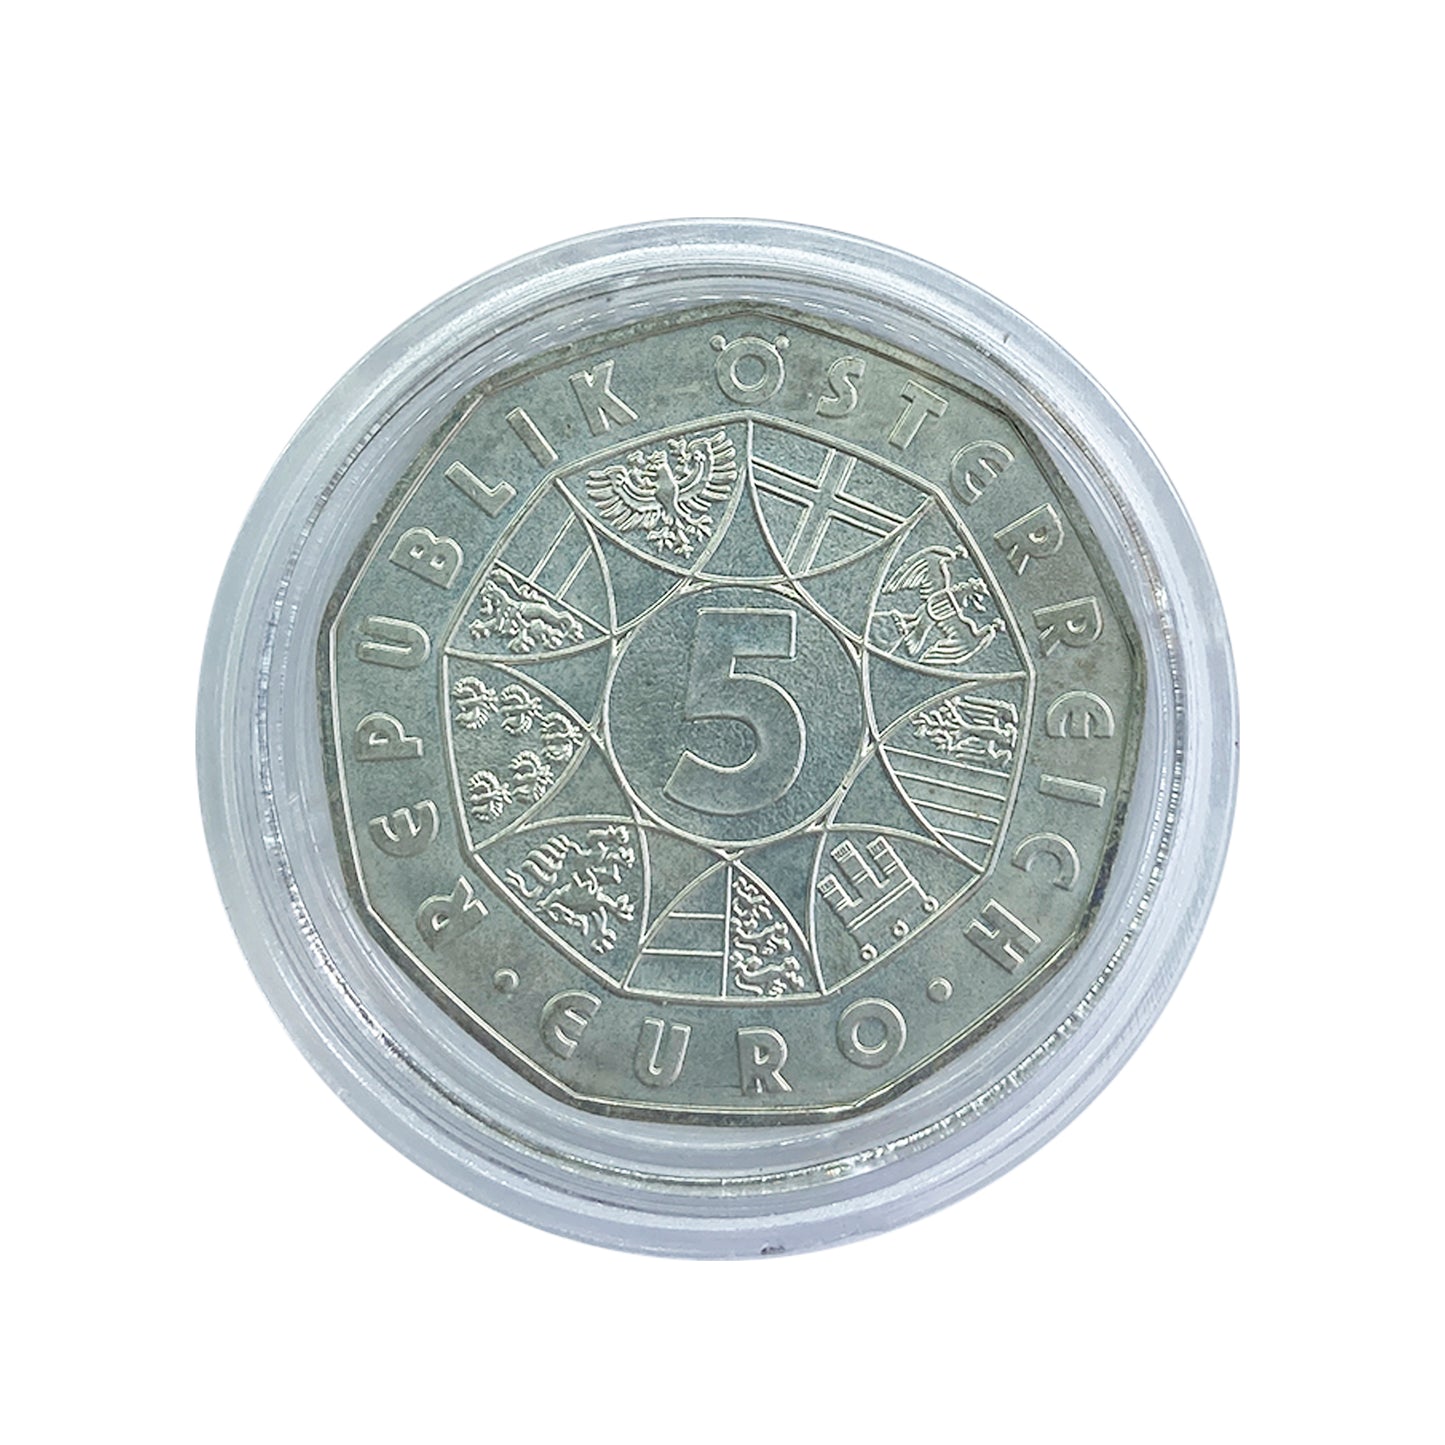 Austria - Moneda 5 euros plata 2008 - Fútbol - Regate